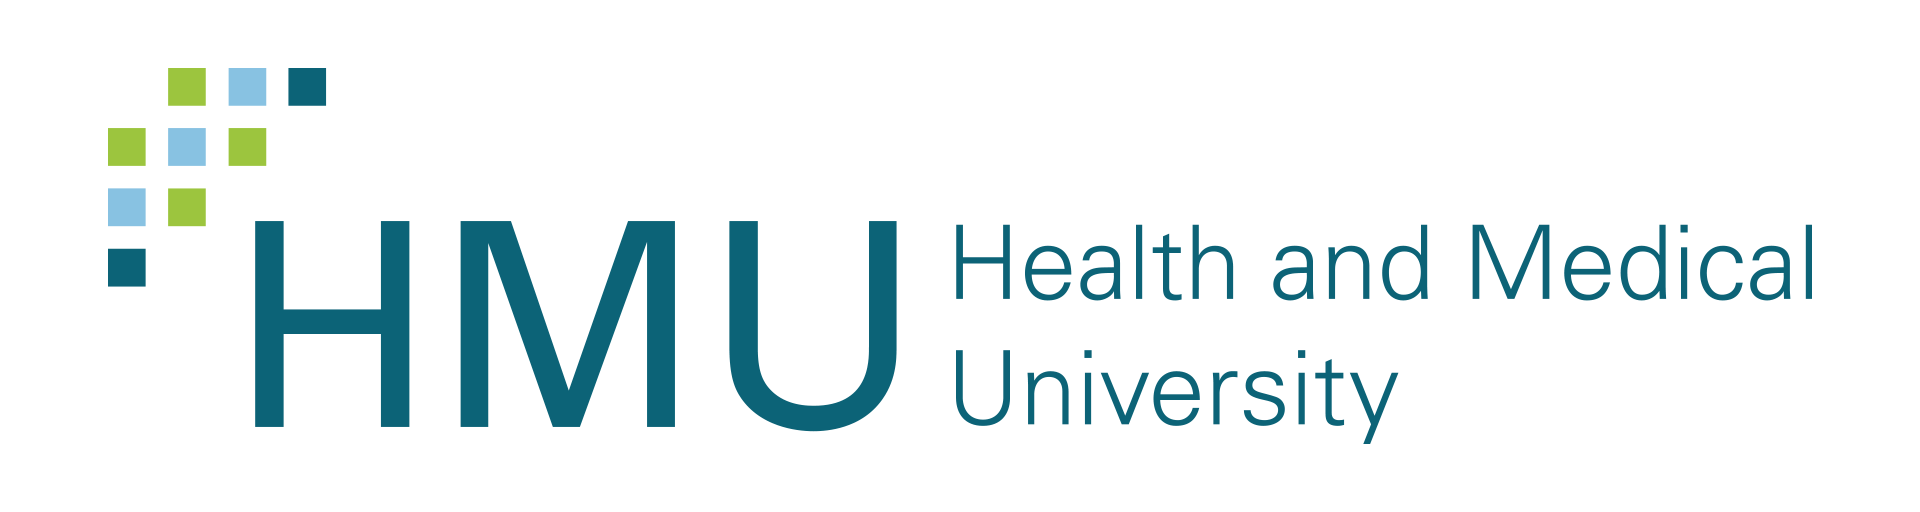 HMU - Health and Medical University Logo